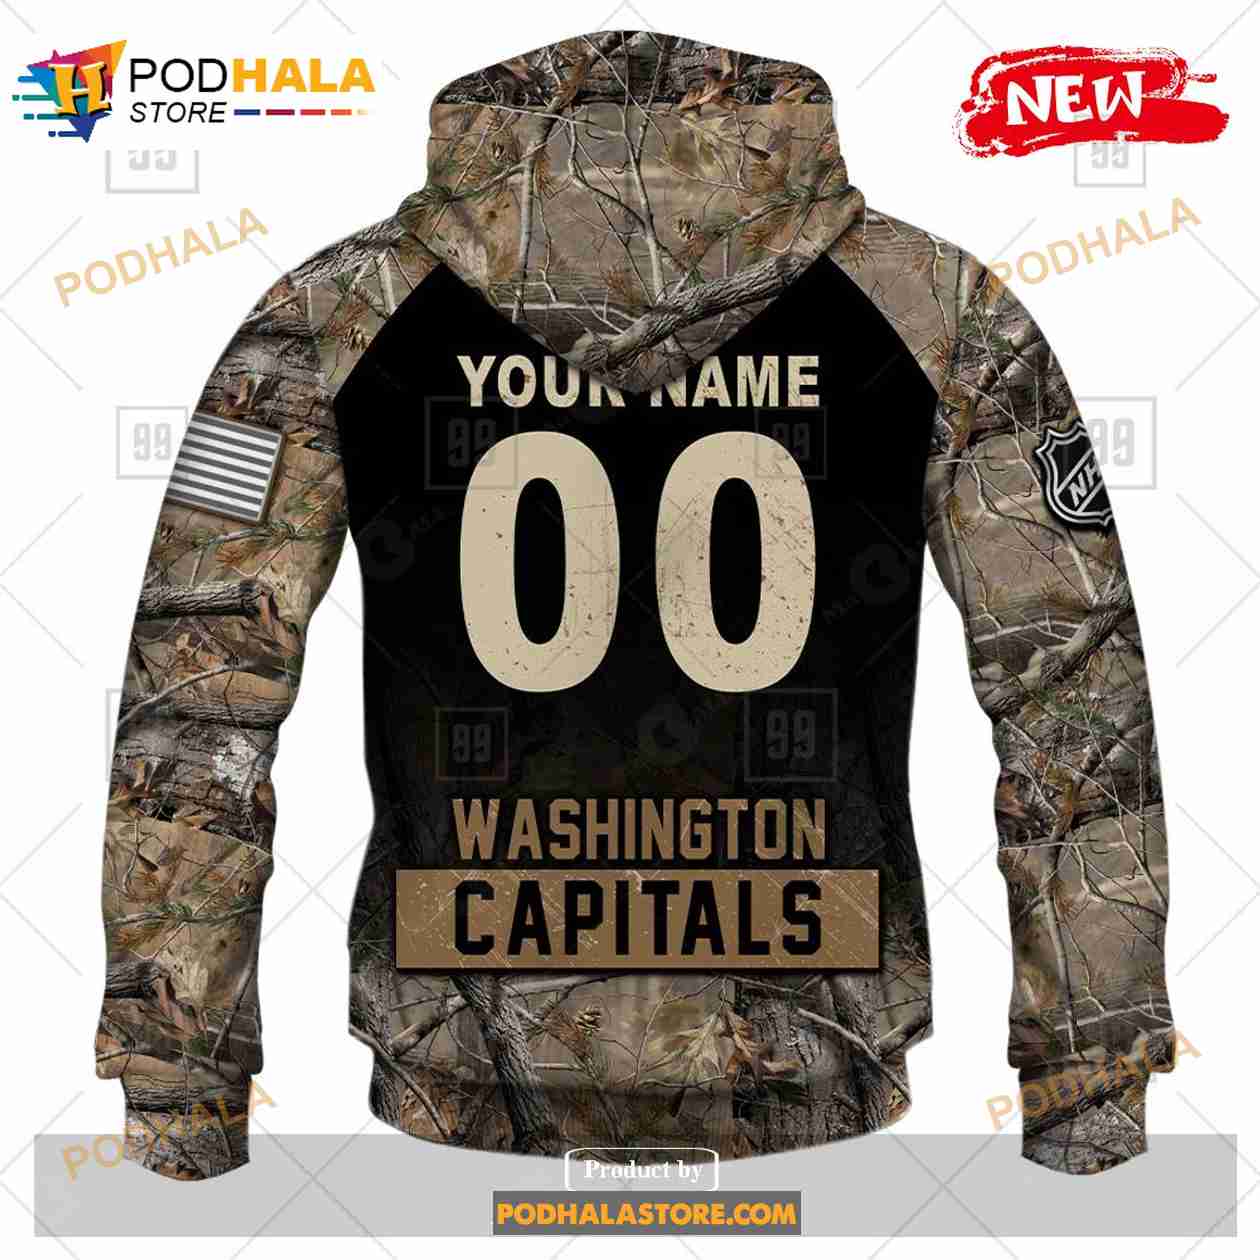 Washington Capitals Wear Camouflage Jerseys to Honor Military